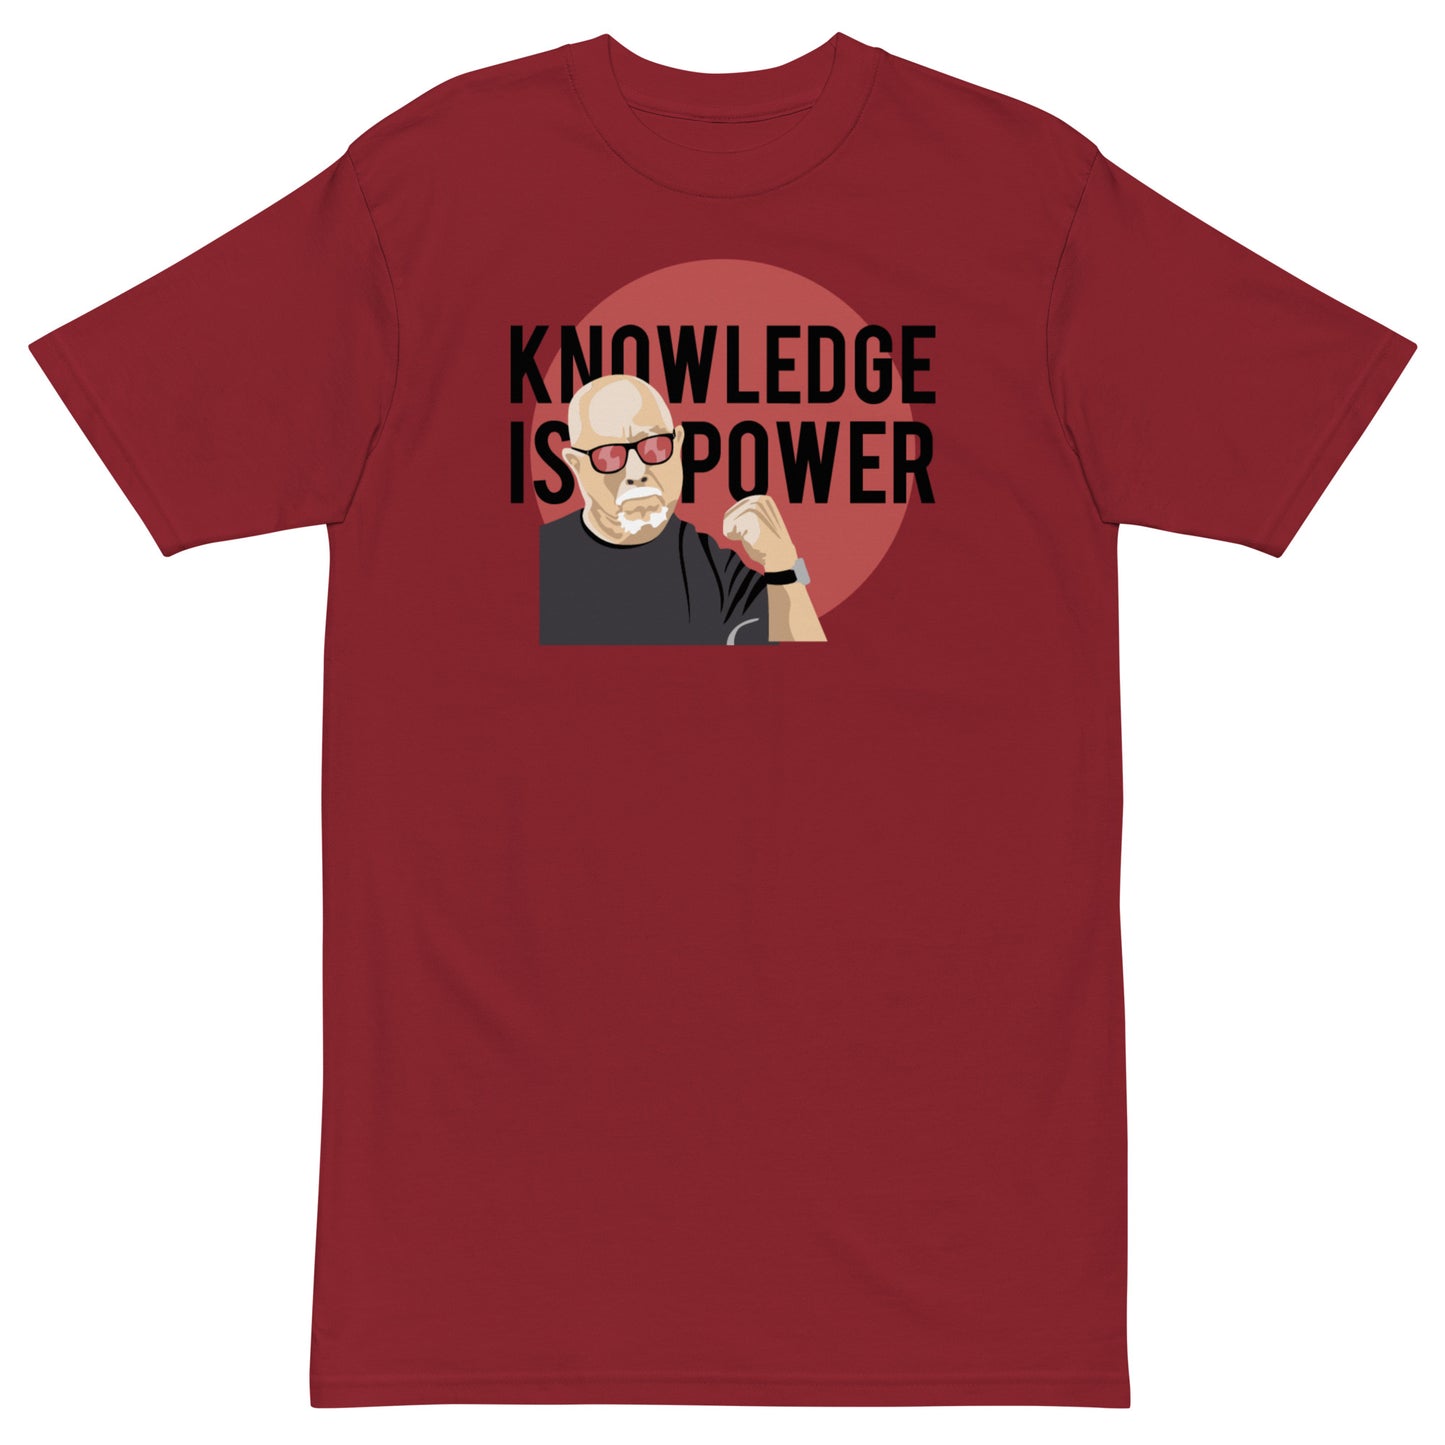 Knowledge is power - dark